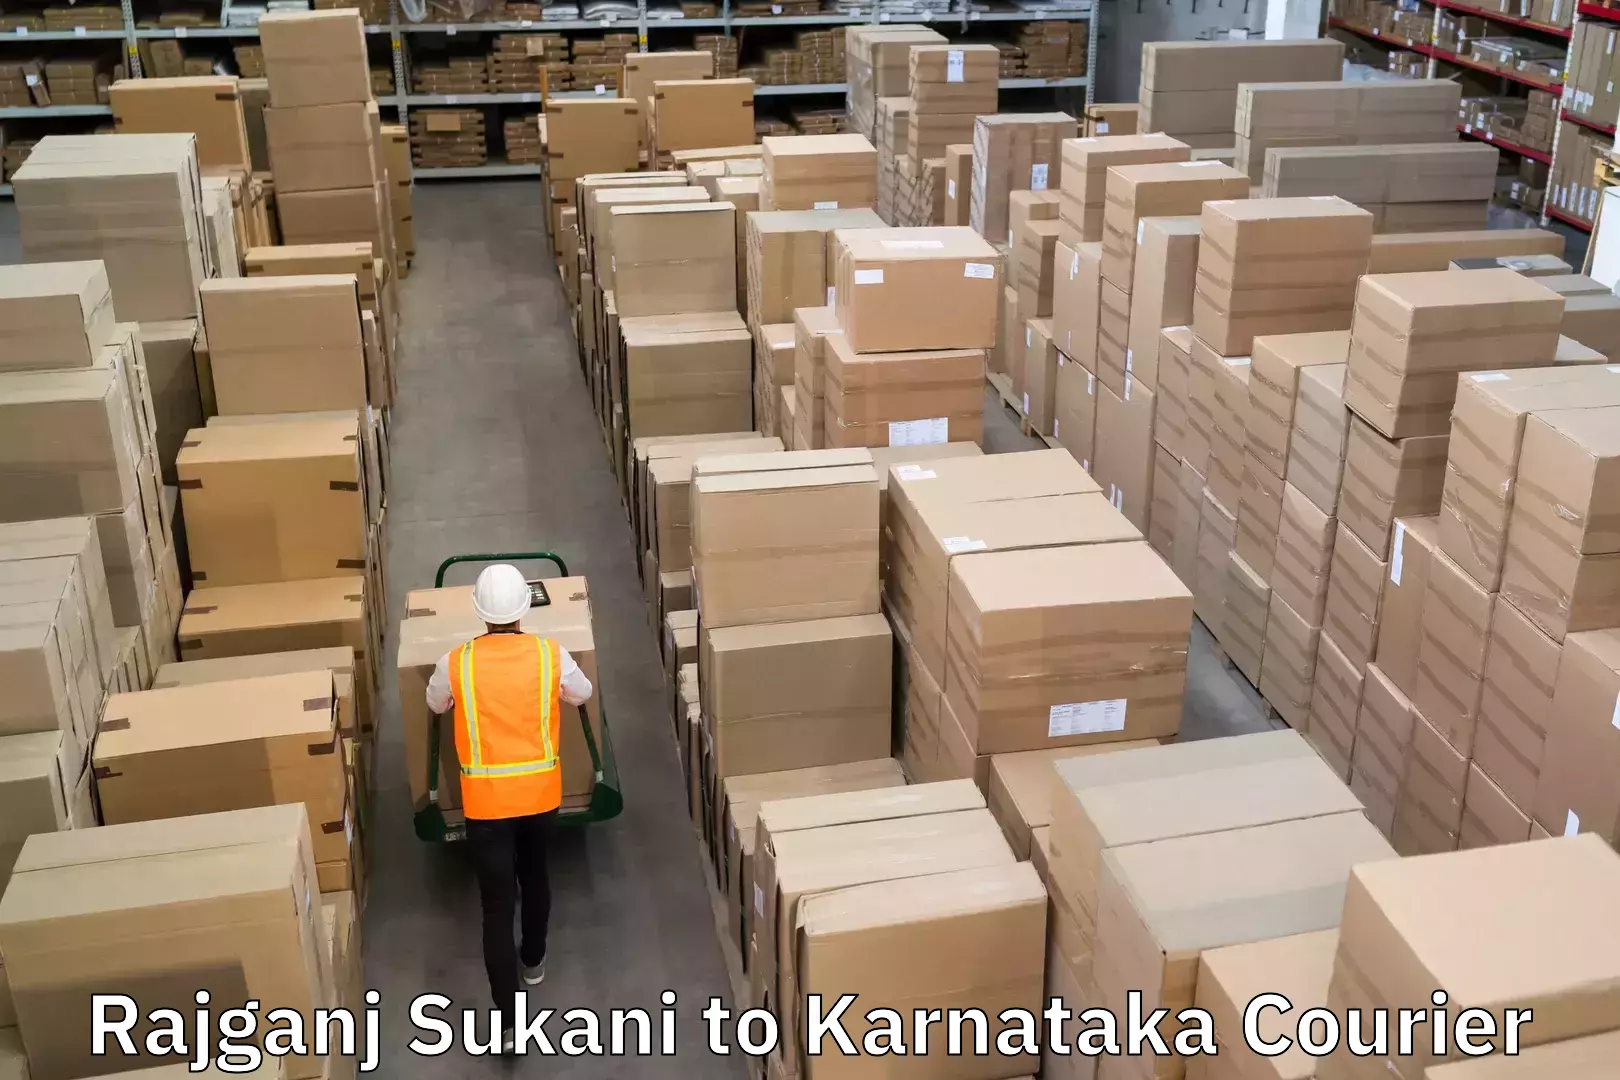 Courier service partnerships Rajganj Sukani to Karnataka